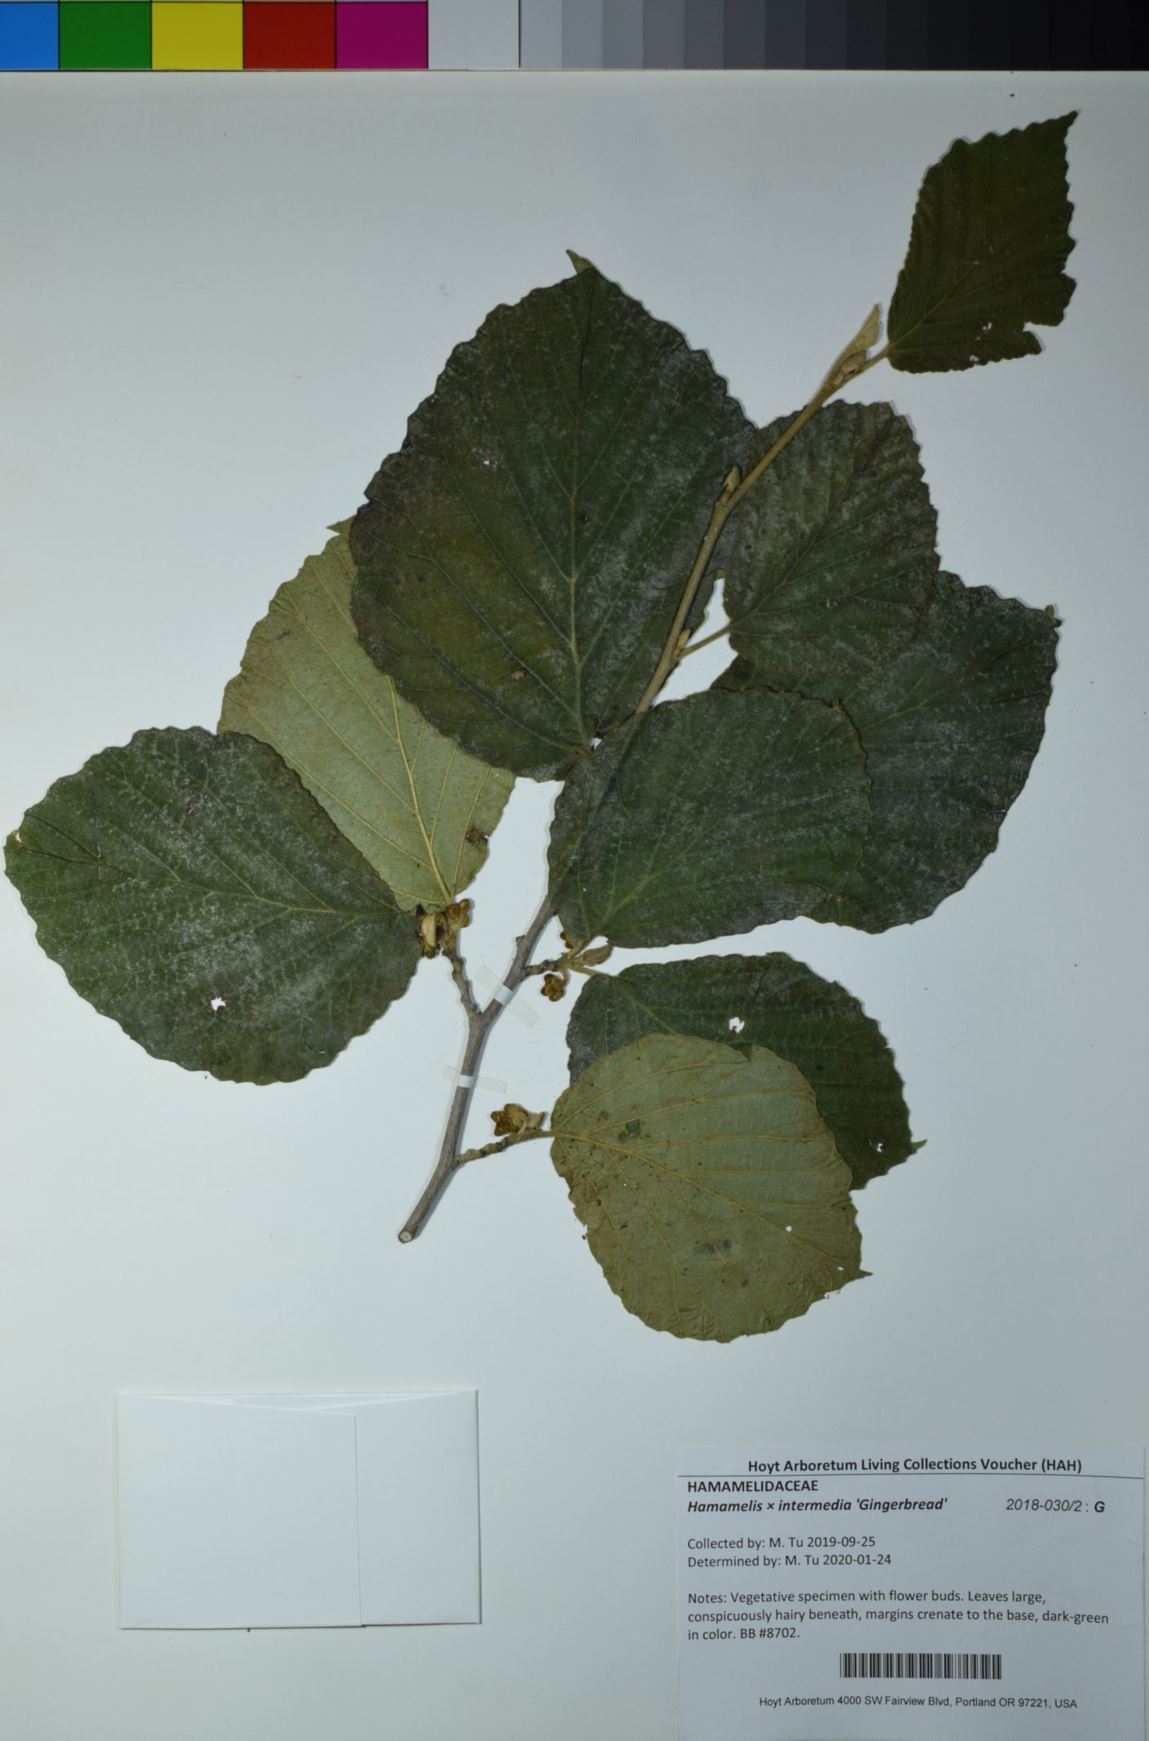 Hamamelis × intermedia 'Gingerbread'